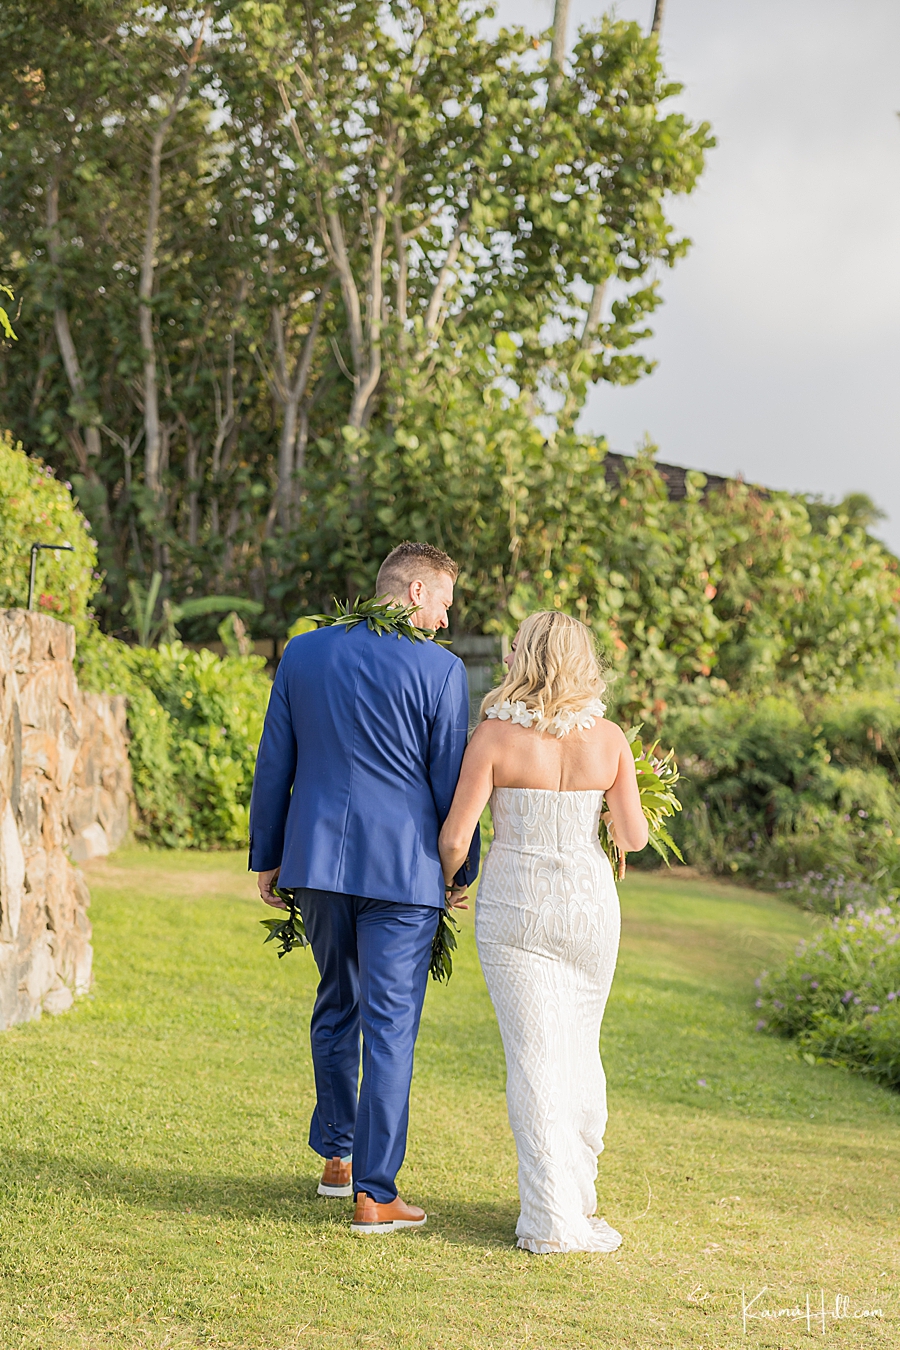 Maui beach wedding locations